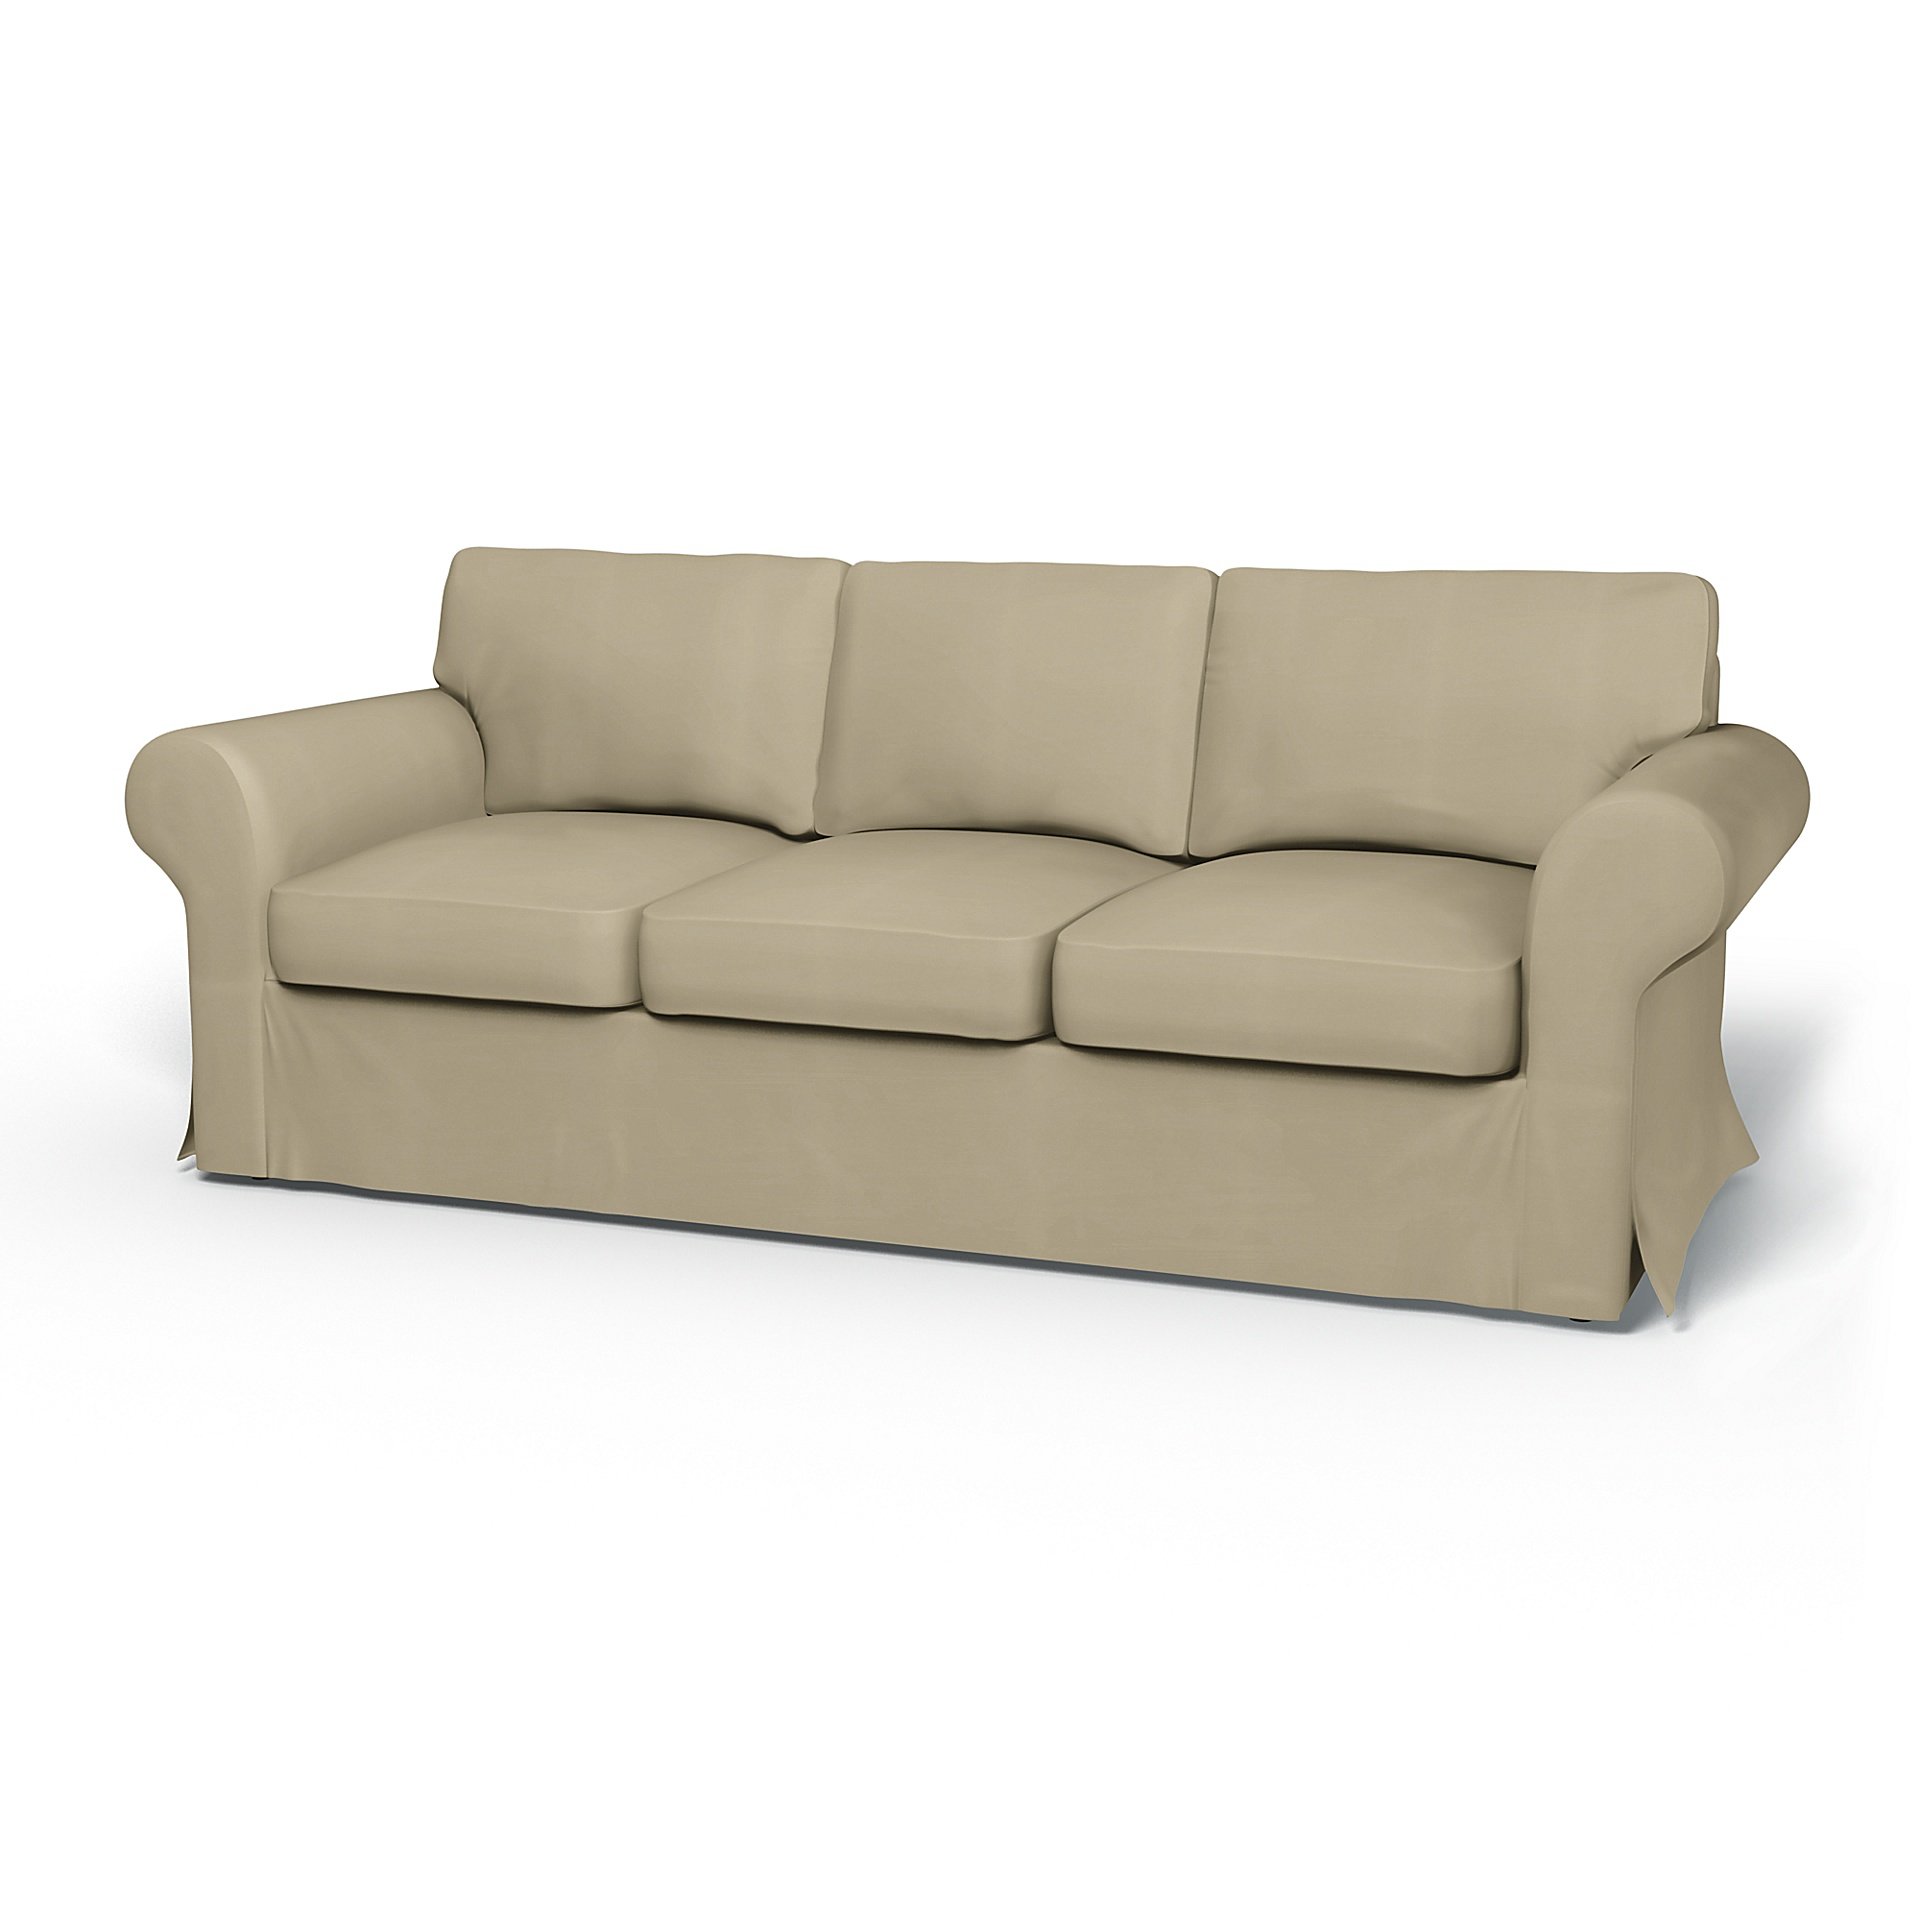 IKEA - Ektorp 3 Seater Sofa Bed Cover, Sand Beige, Cotton - Bemz